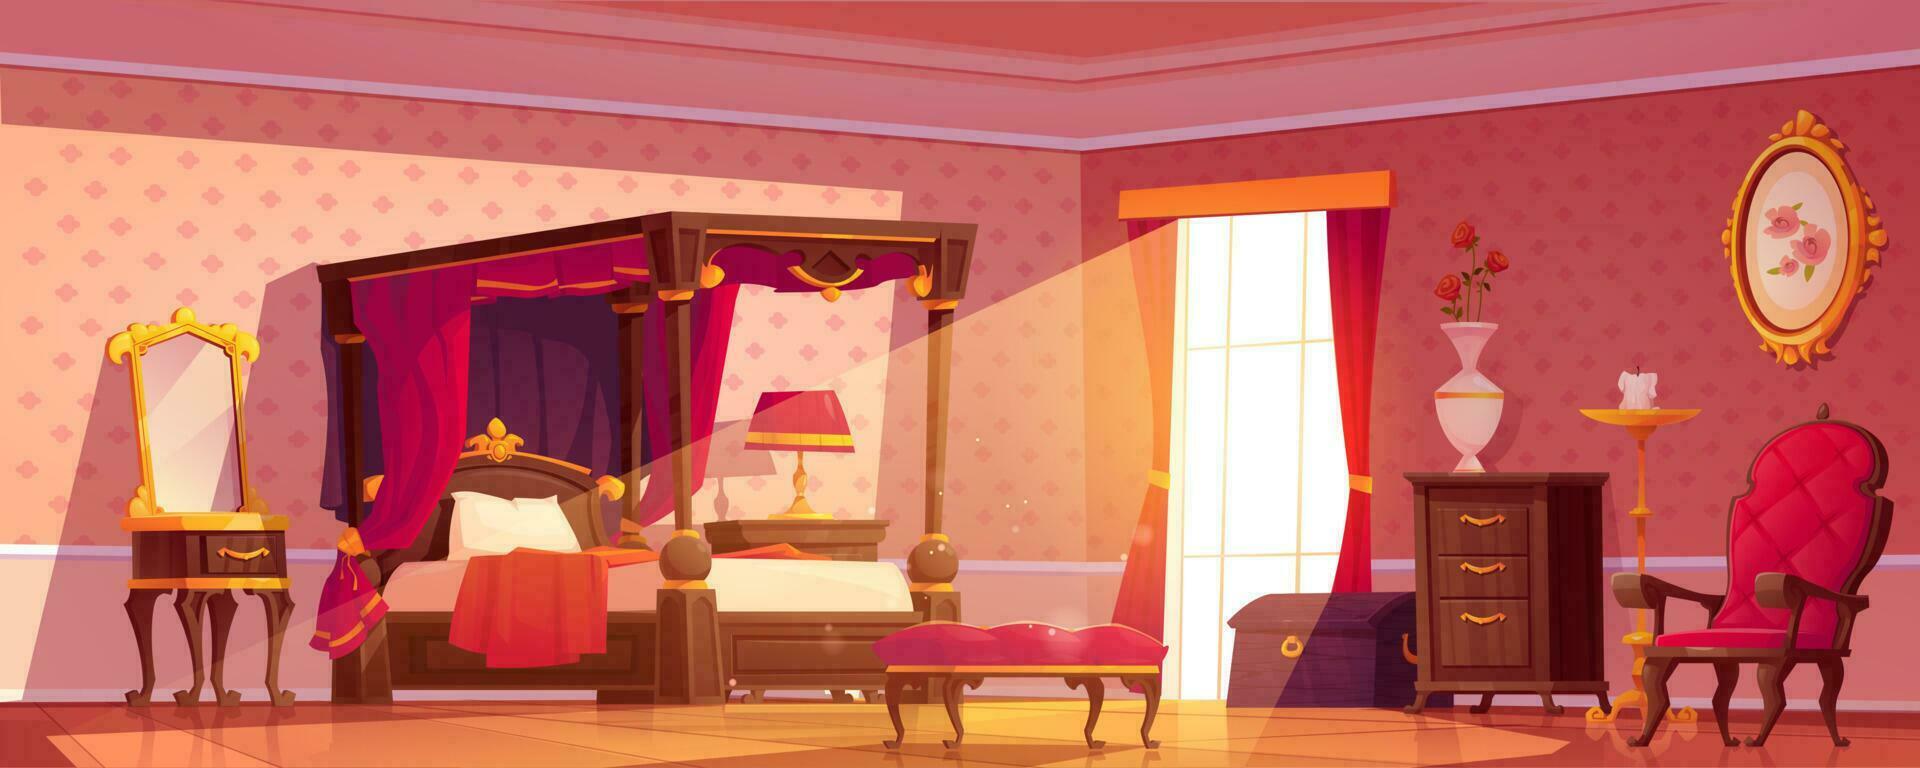 Cartoon royal bedroom with vintage furniture vector